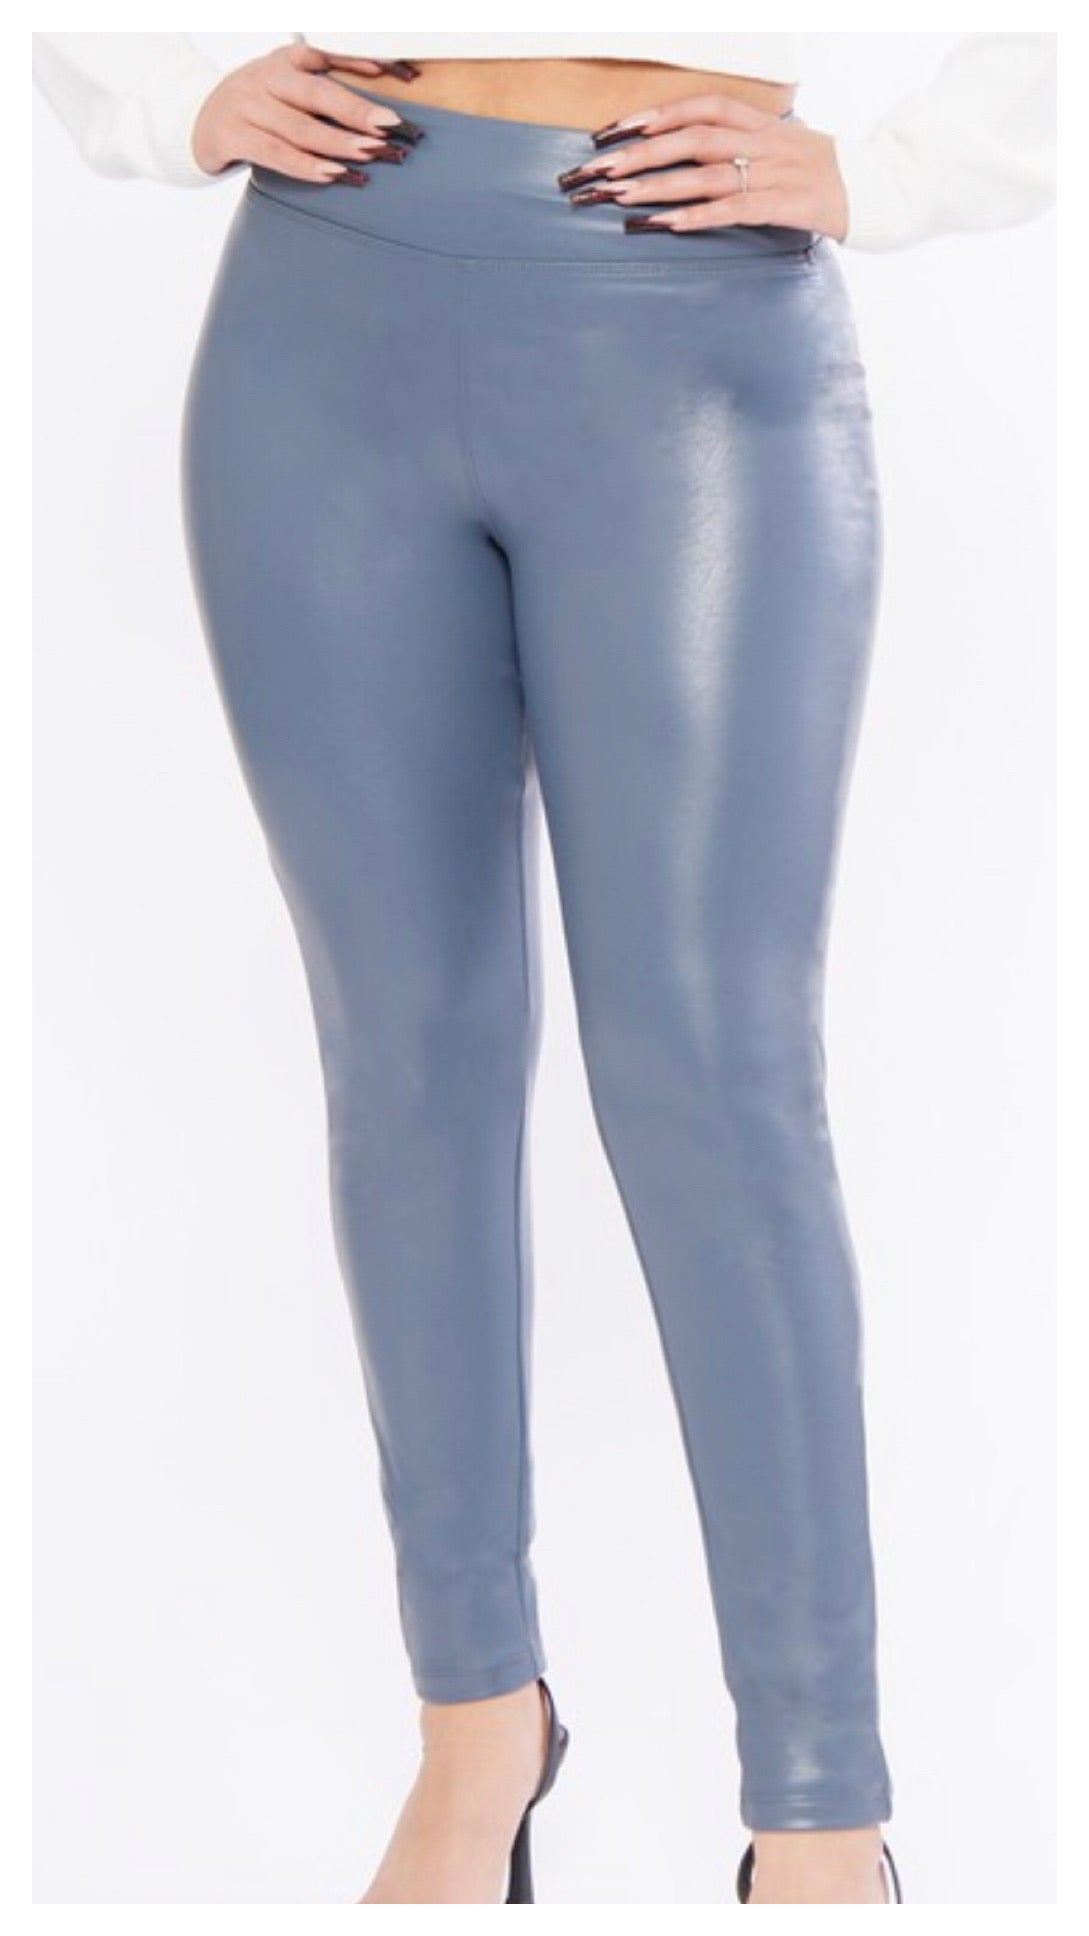 Best Deal for Gondola Blu Faux Leather Leggings for Women High Waist